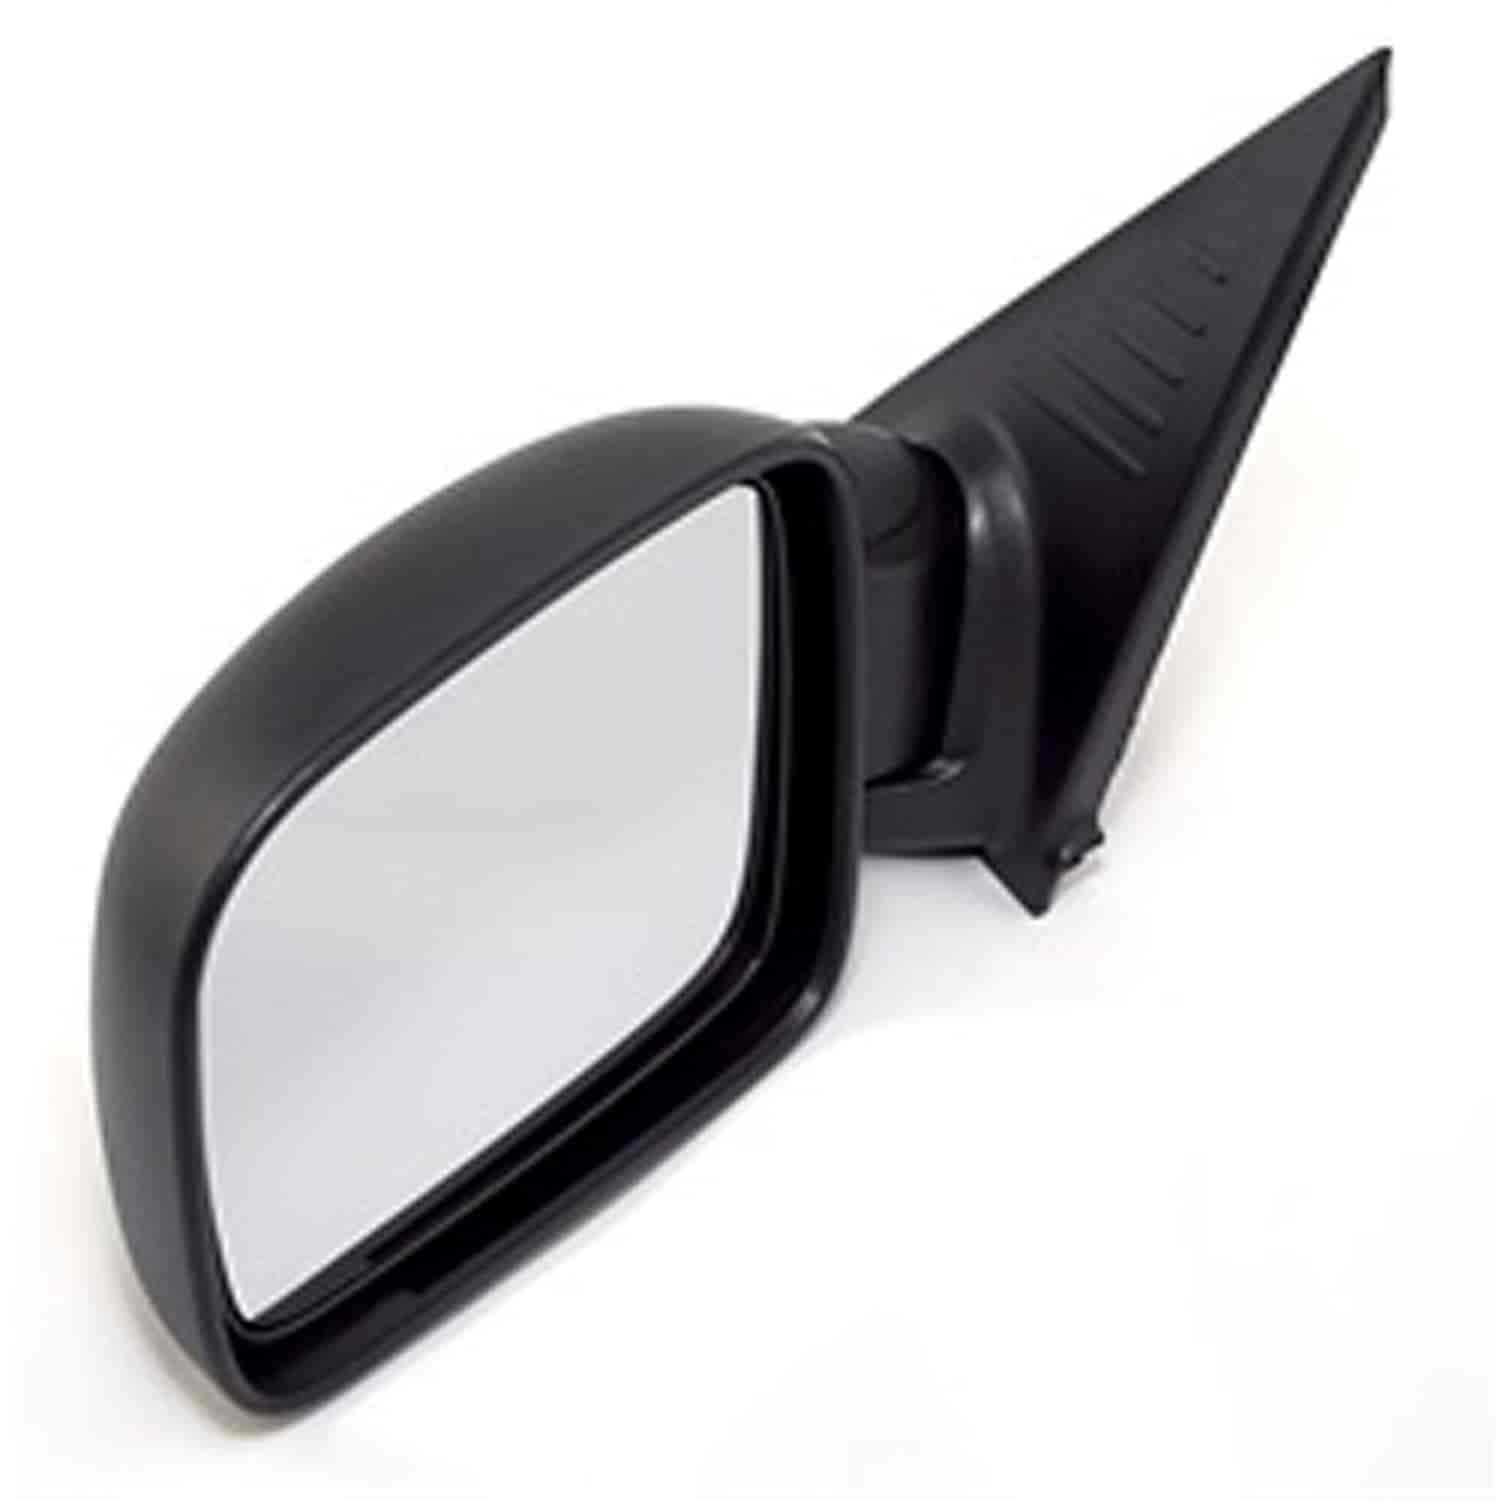 This black folding door mirror from Omix-ADA fits